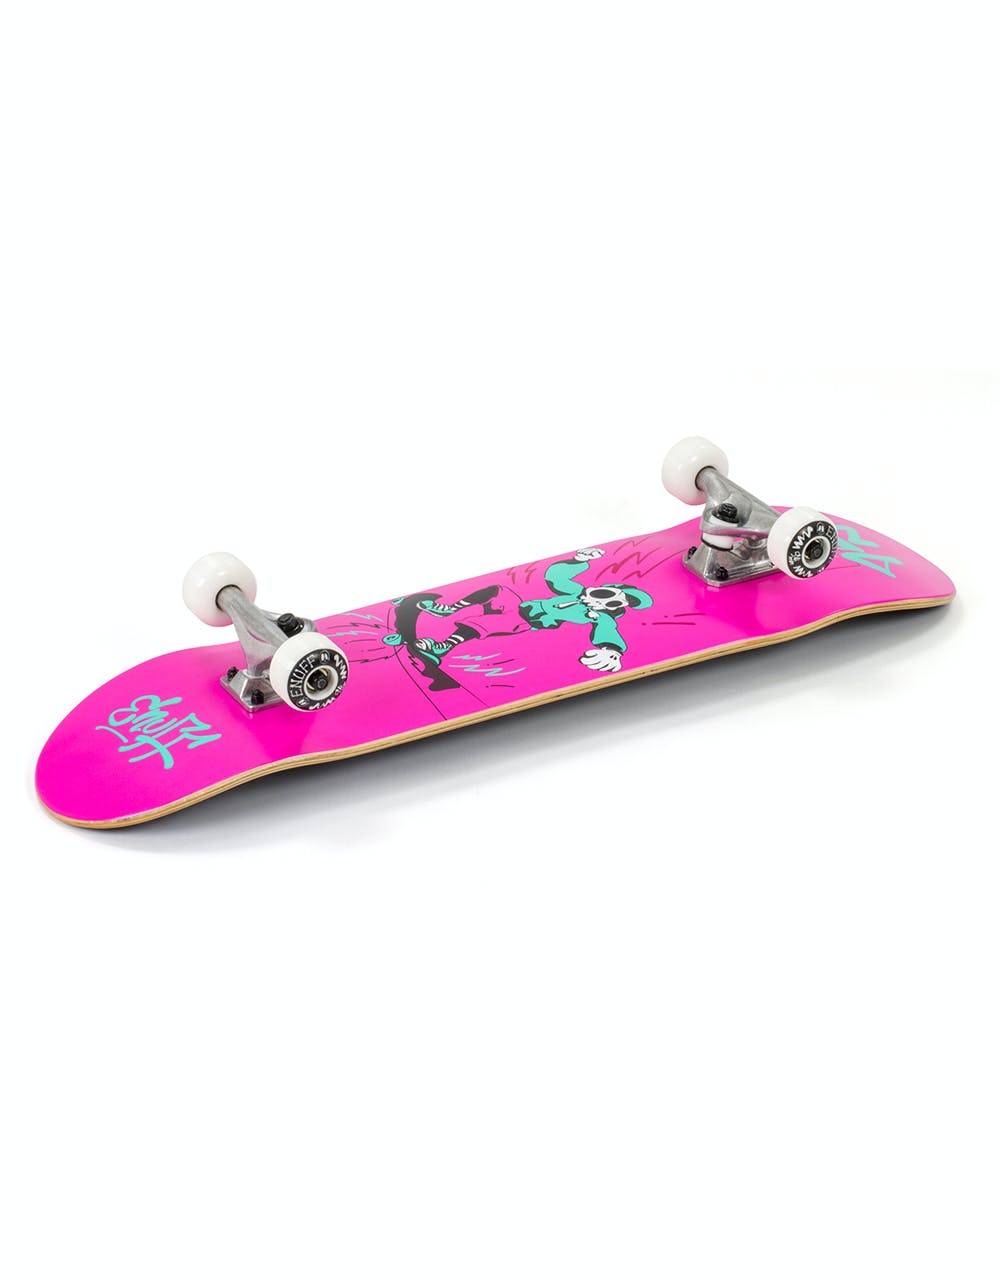 Enuff Skully Mini Complete Skateboard - 7.25"